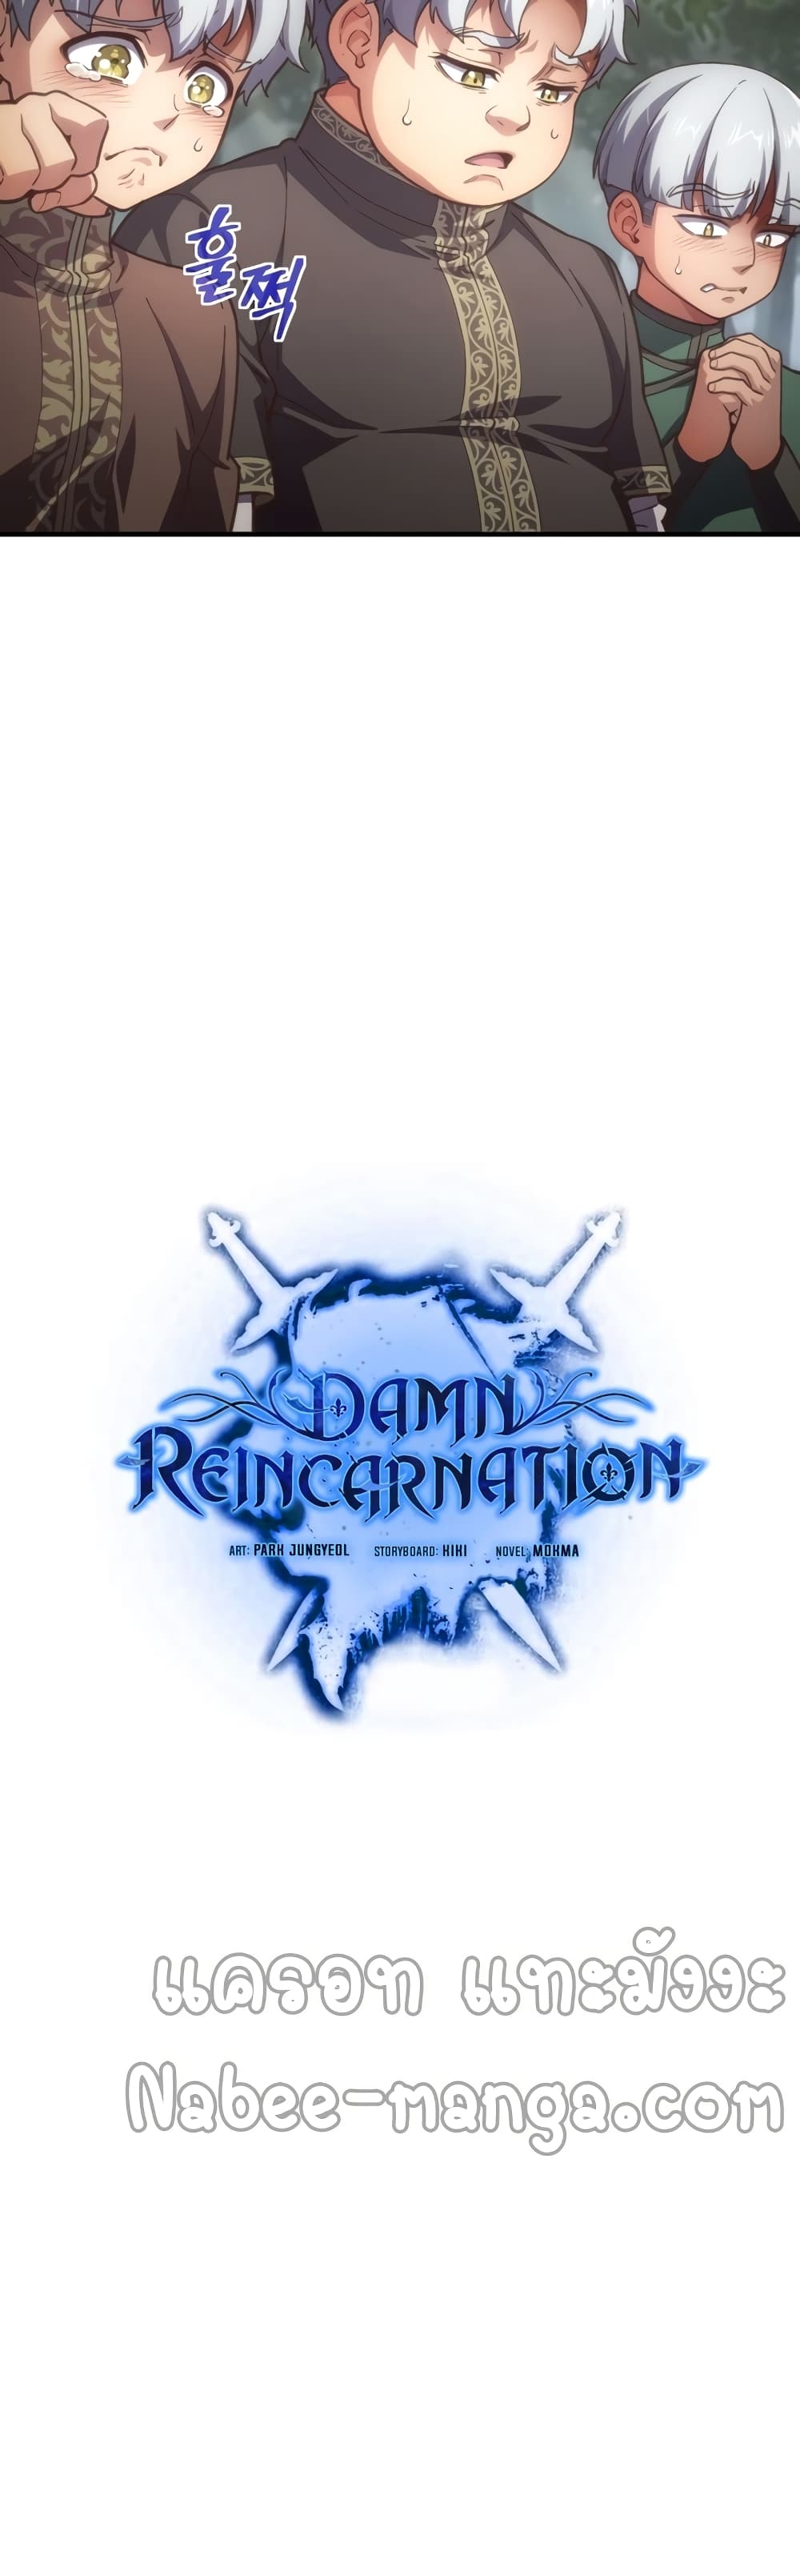 Damn Reincarnation ตอนที่ 9 (8)